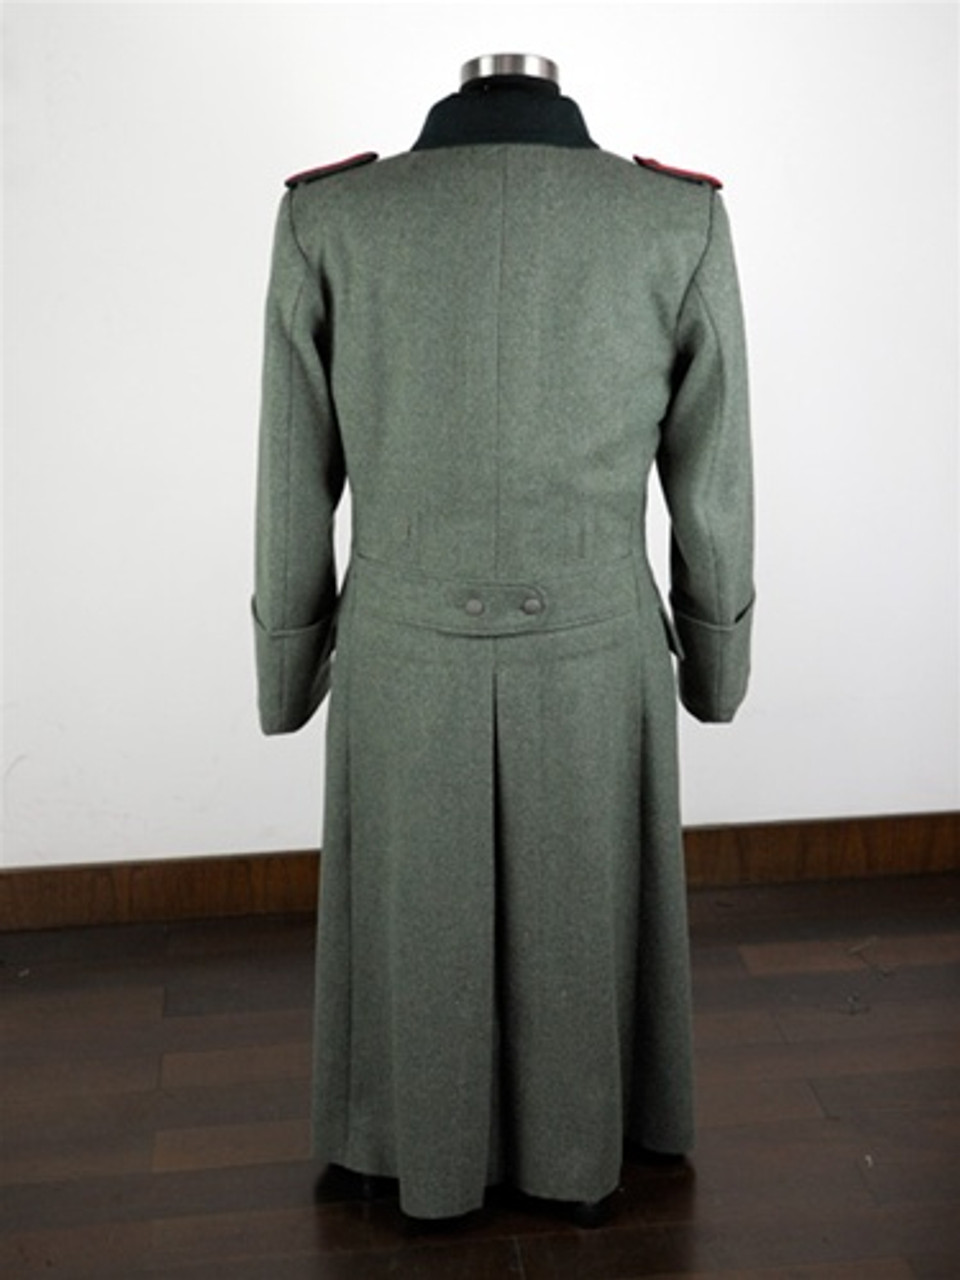 M37 Greatcoat from Hessen Antique